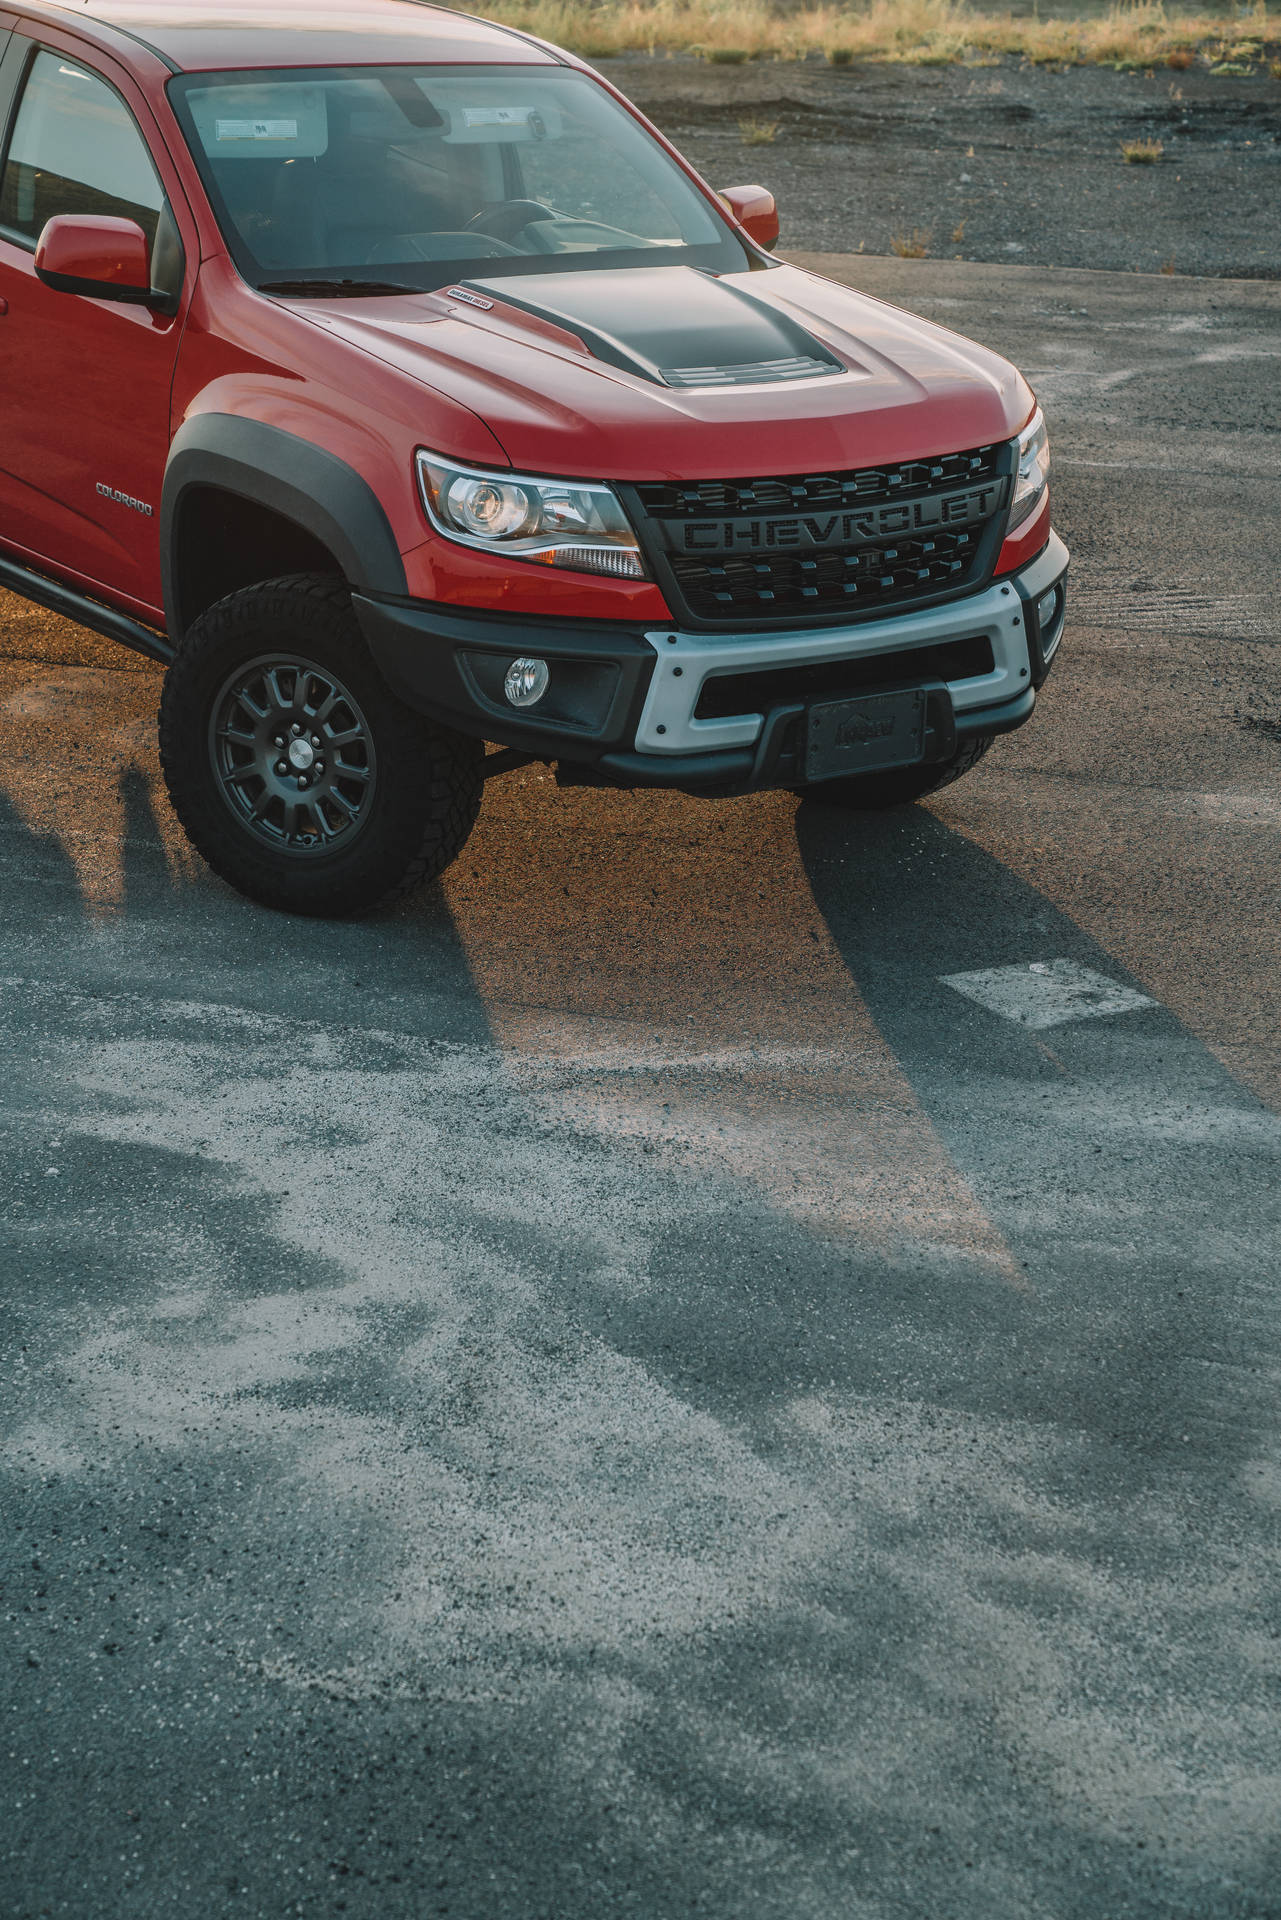 Chevrolet Colorado Zr2 Bison Photoshoot Wallpaper